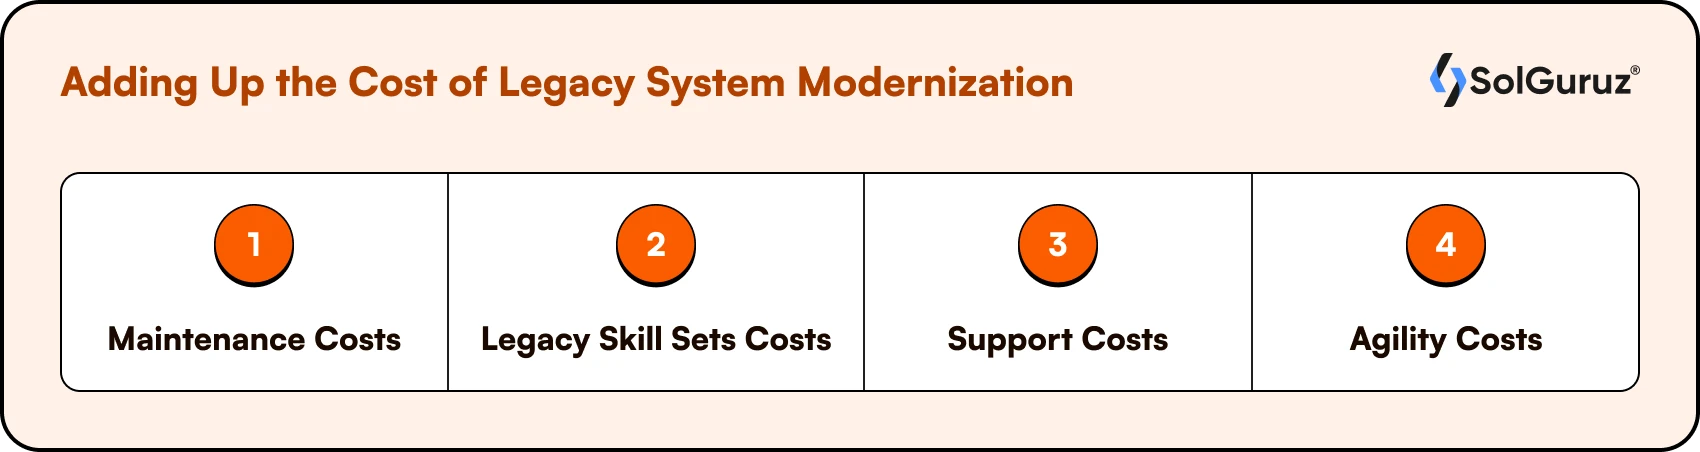 Adding Up the Cost of Legacy System Modernization